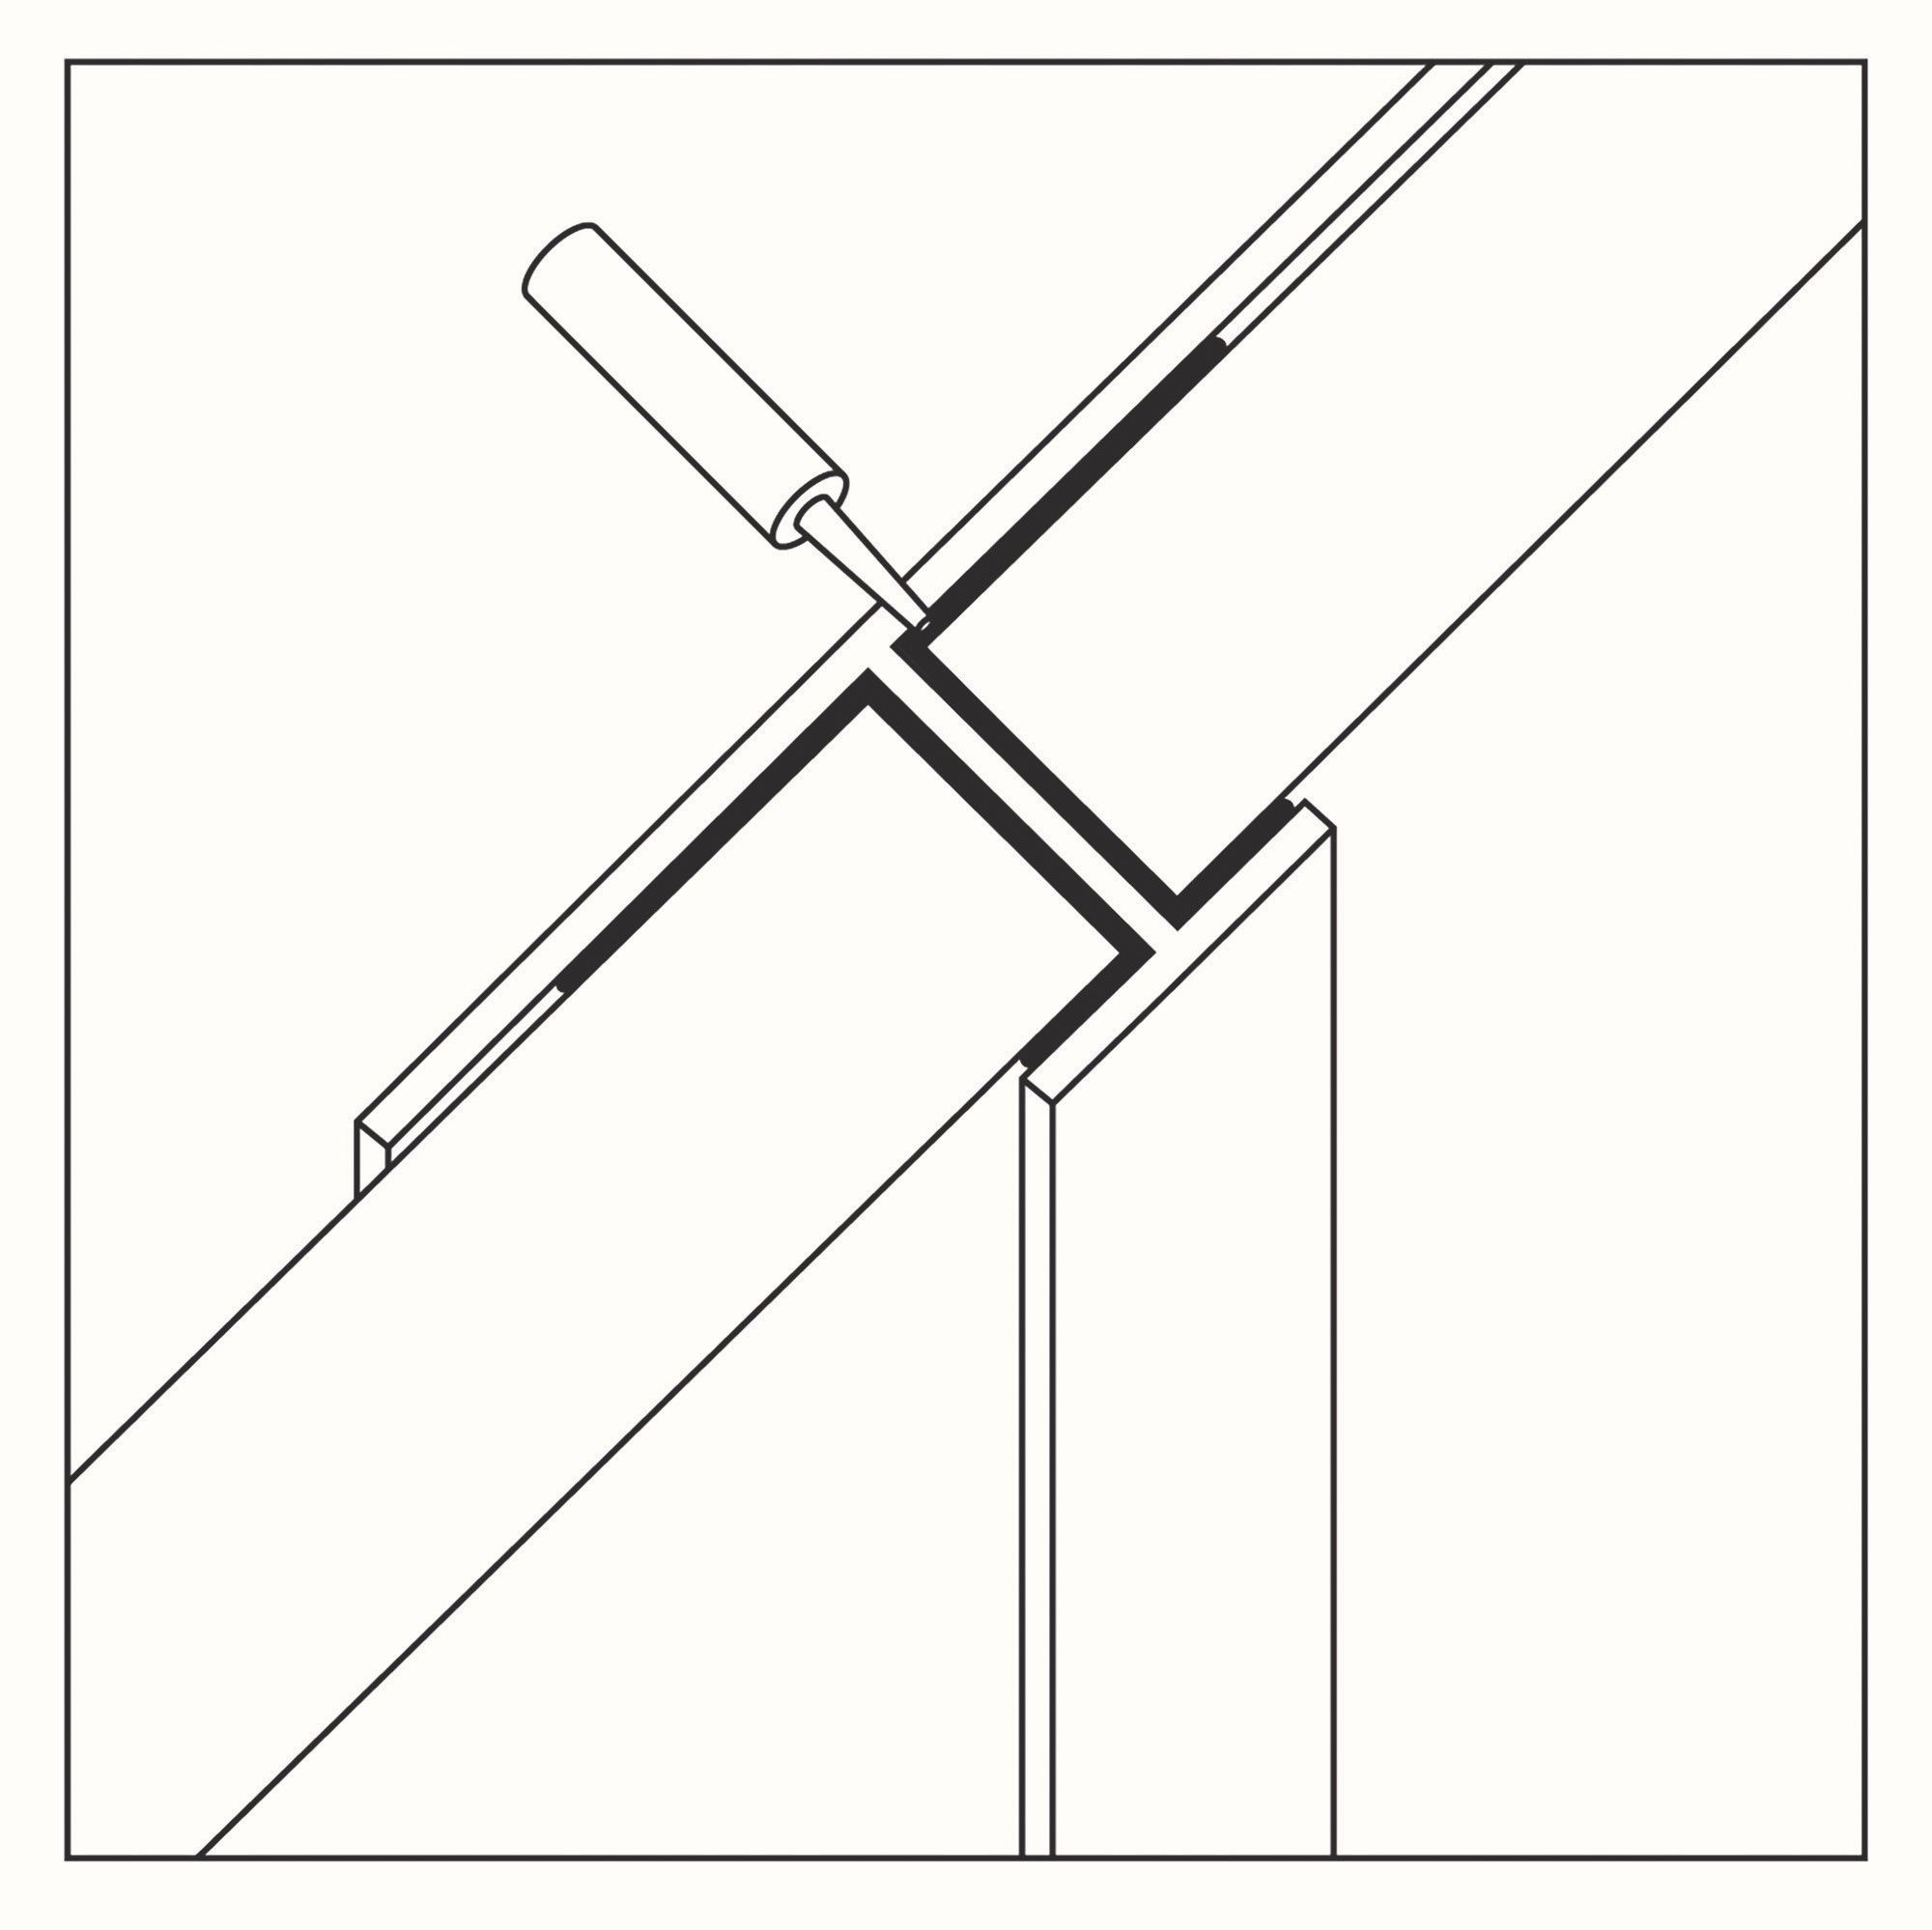 Stylepanel Black Straight Panel straight joint, (W)11mm (T)30mm